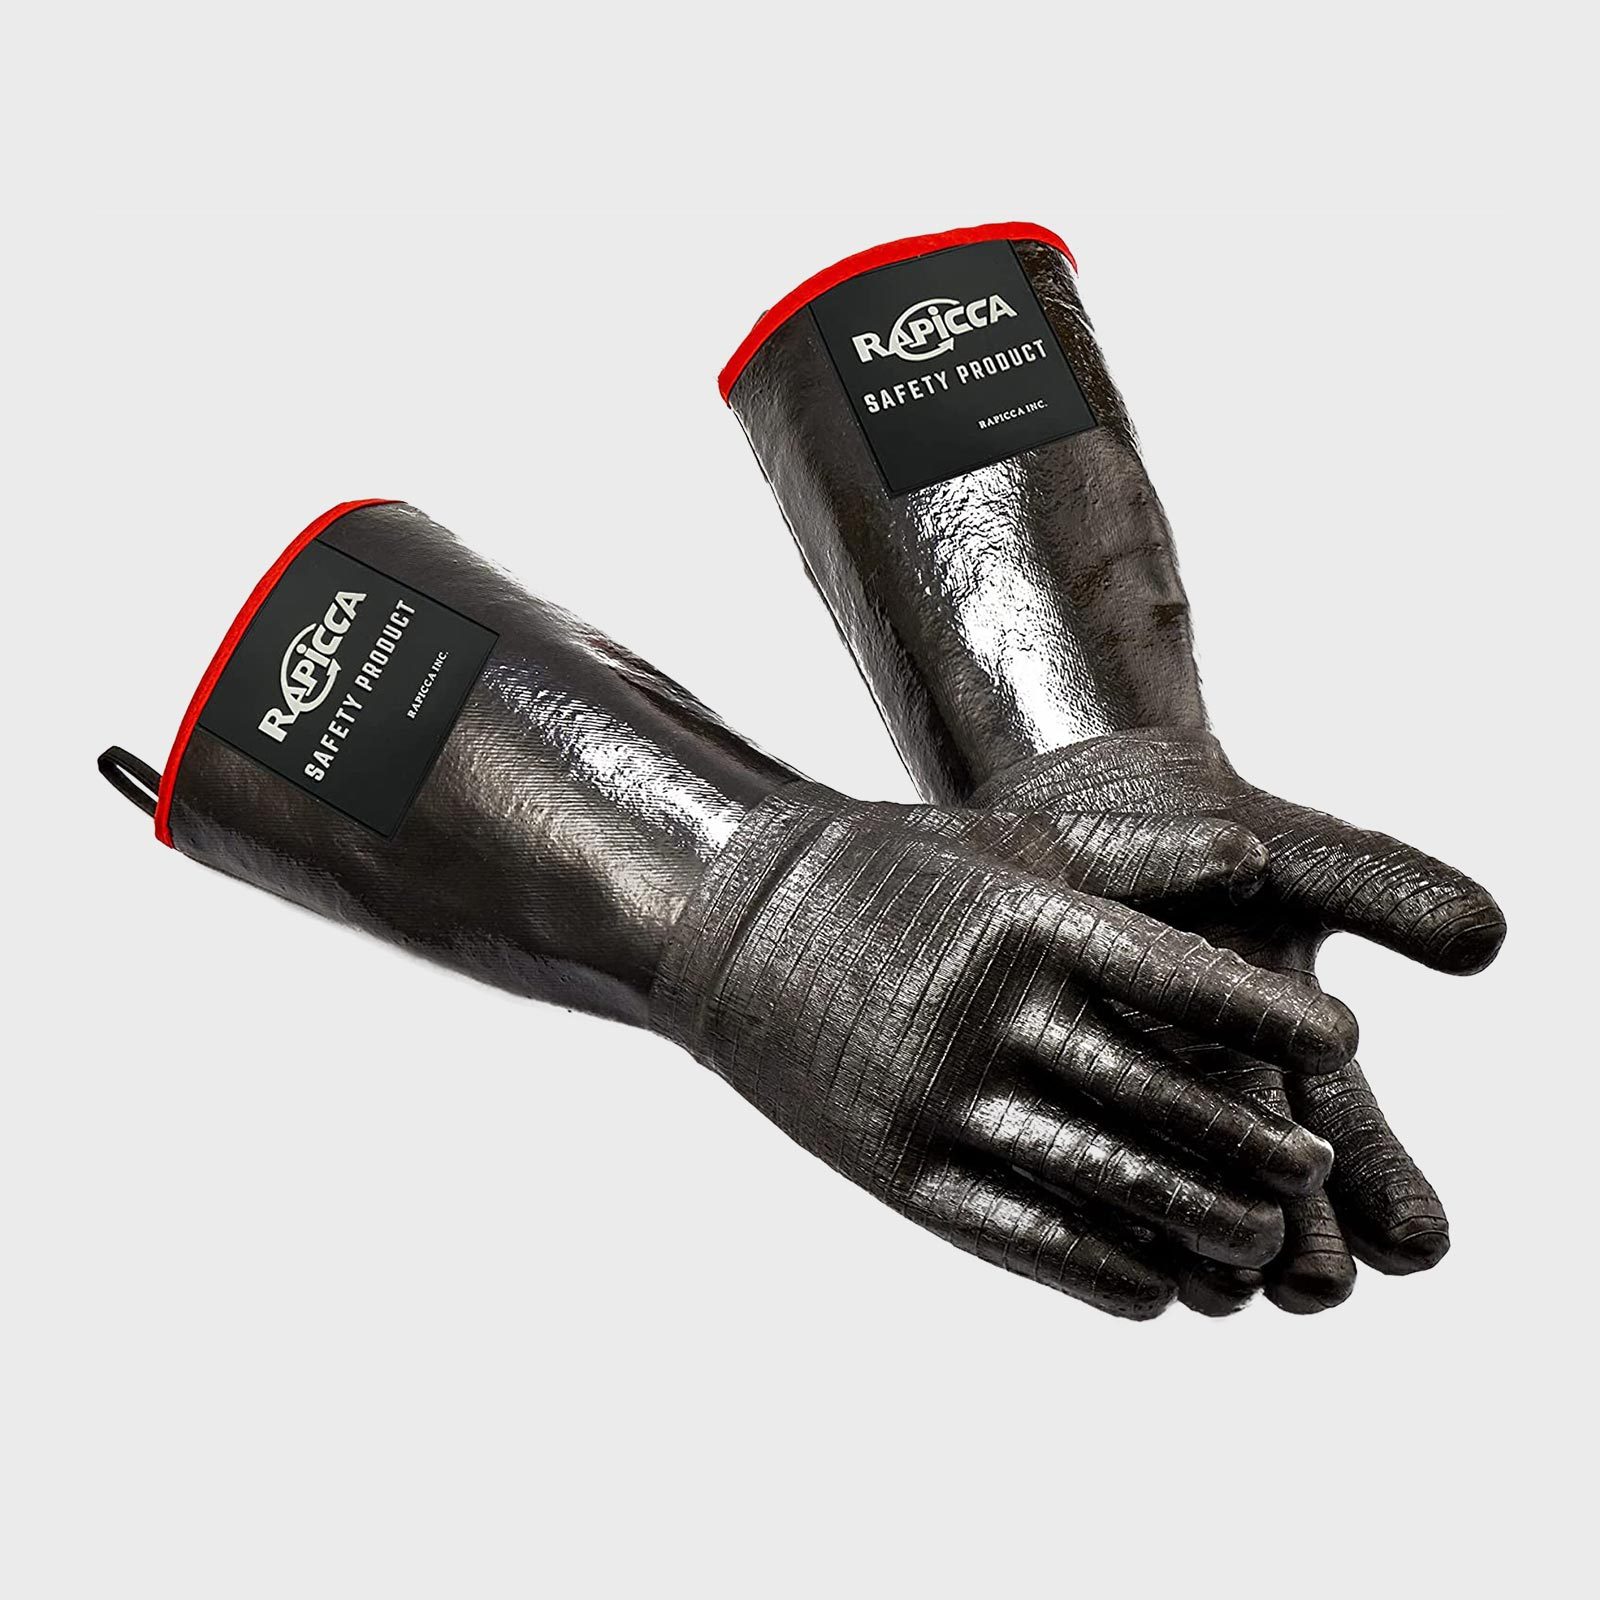 Fhm Ecomm Rapicca Bbq Grill Oven Gloves Via Amazon.com